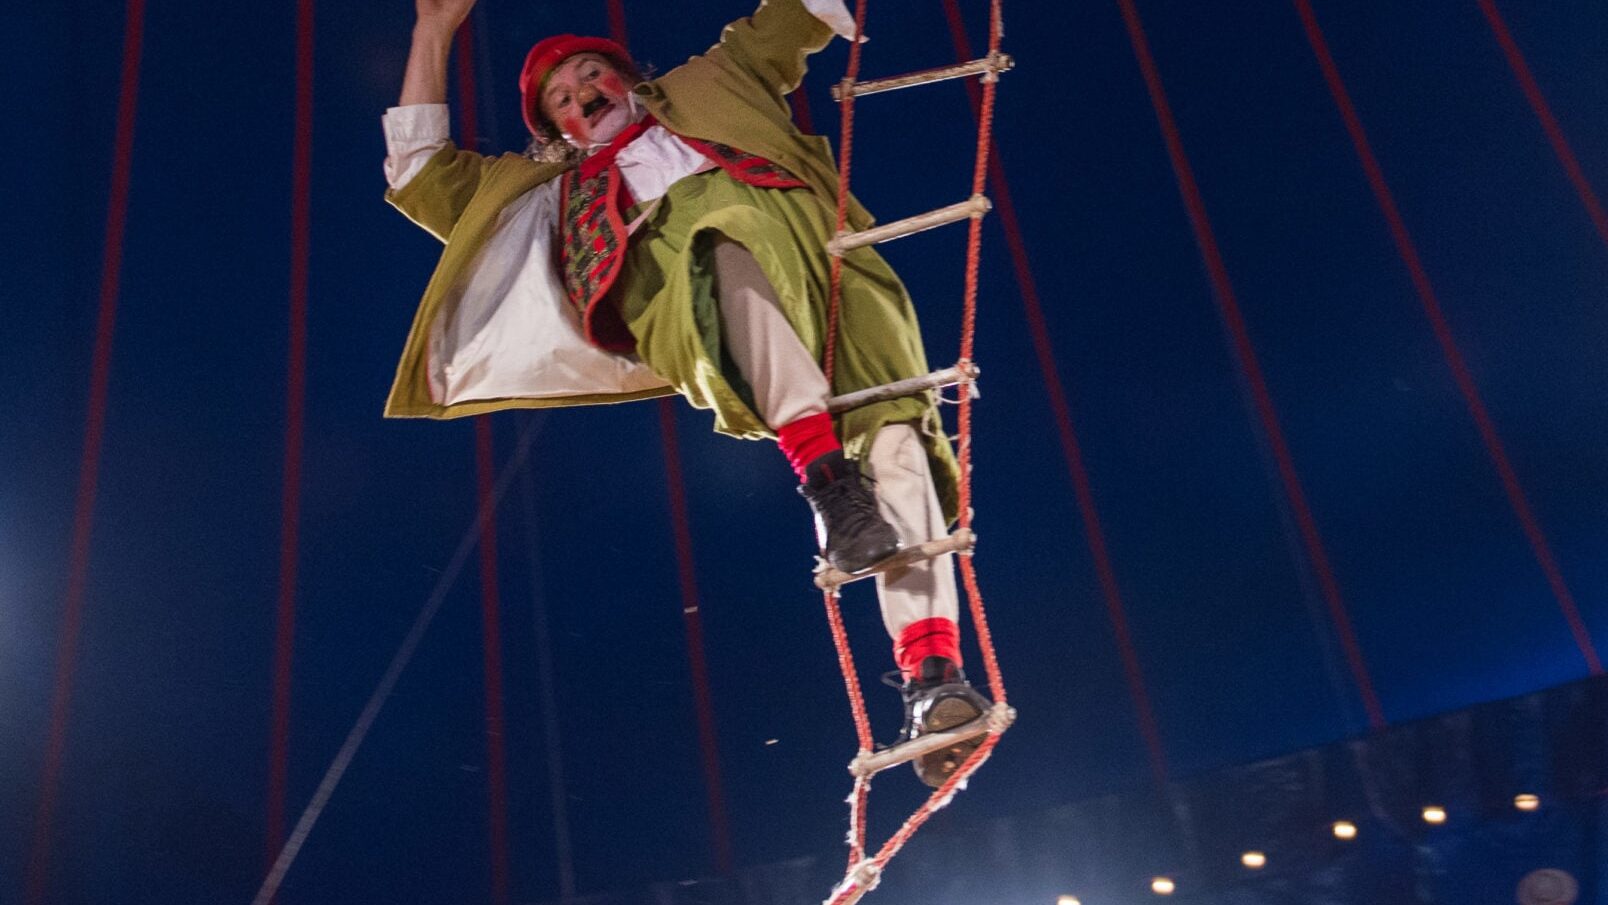 A circus performer climbing a suspended staircase